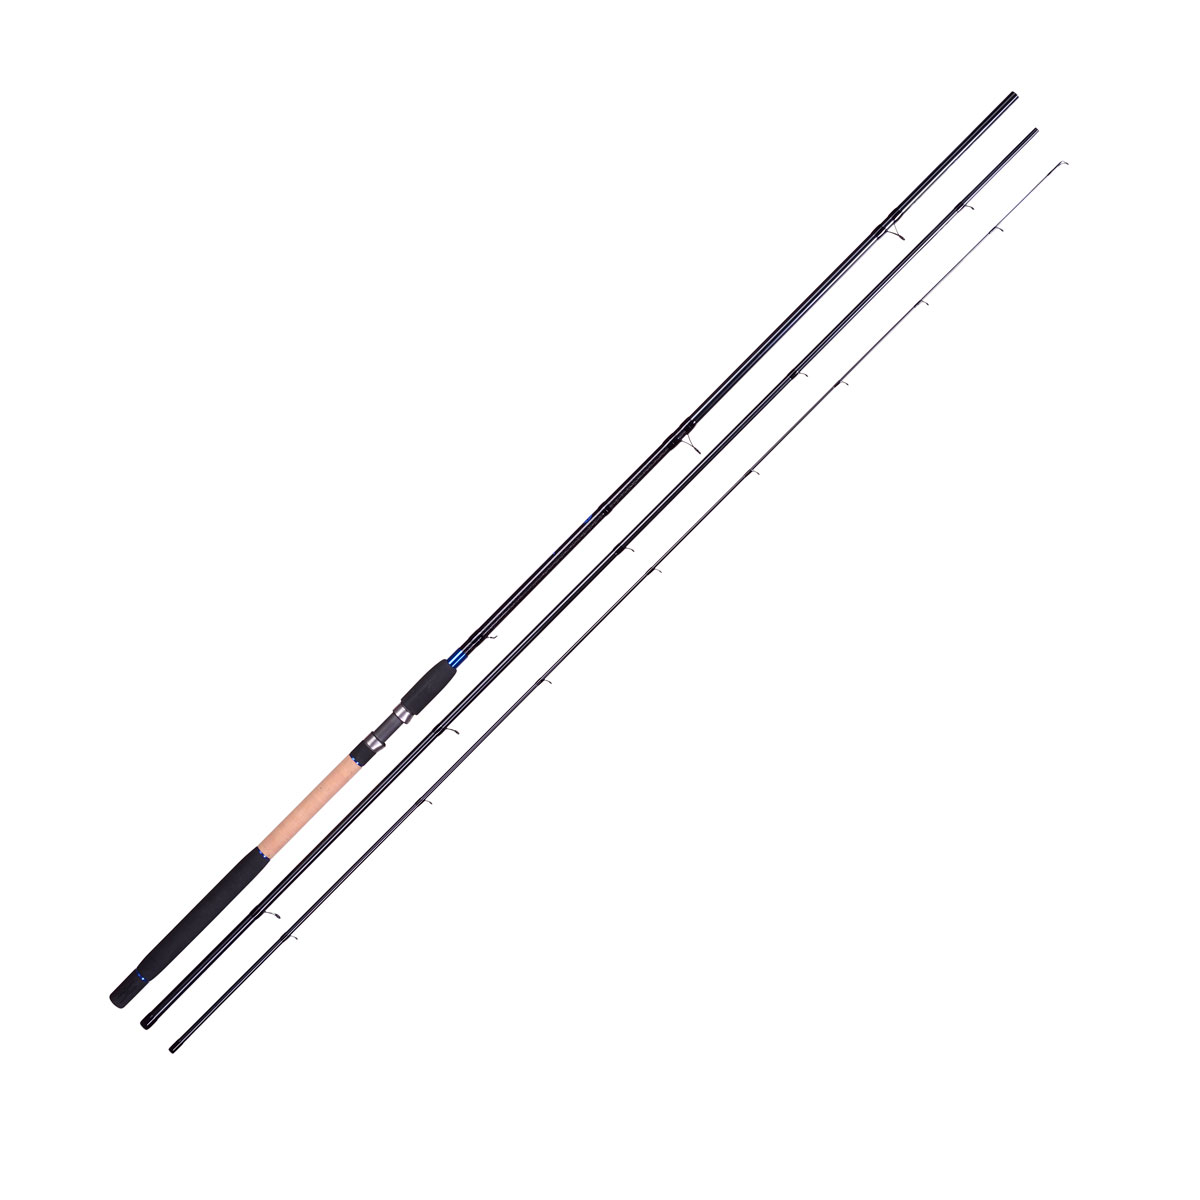 Cadence CR10 14ft Match Fishing Rods - Cadence Fishing